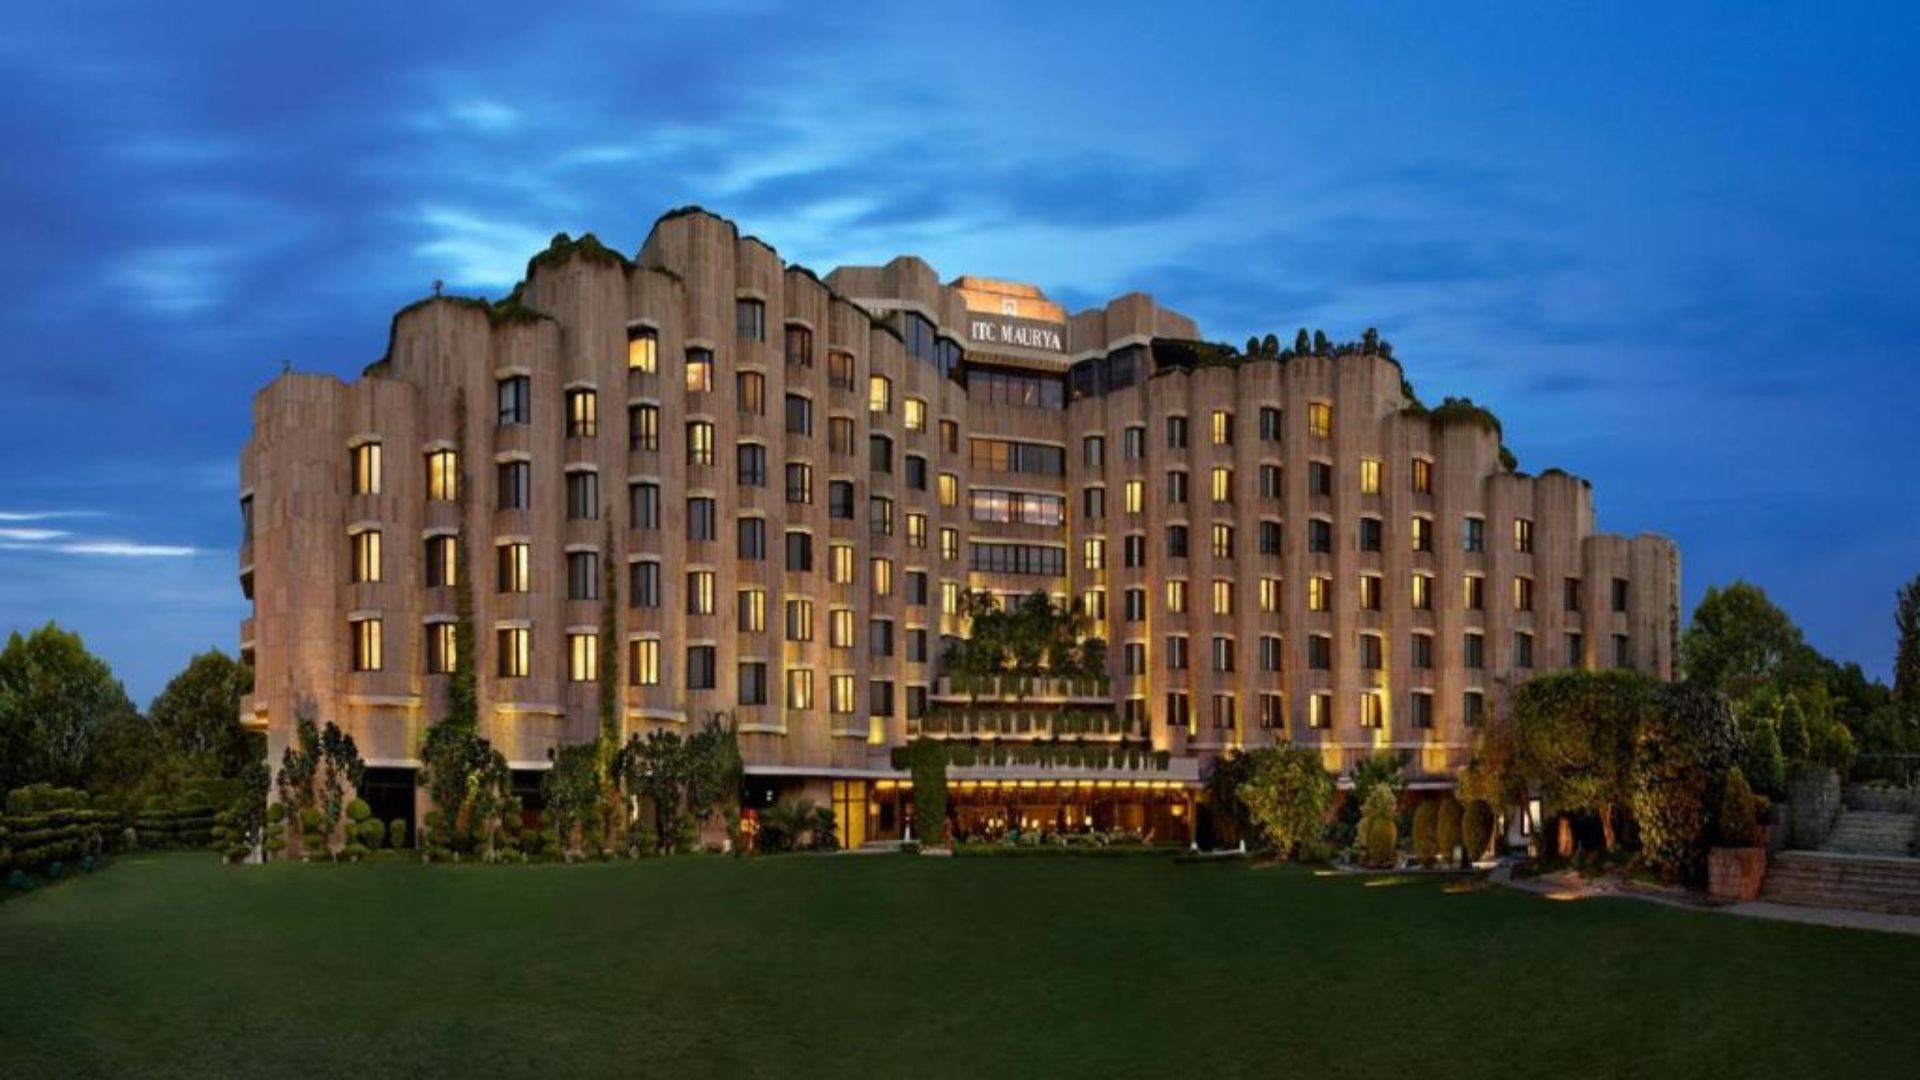 delhi tourism development corporation hotels